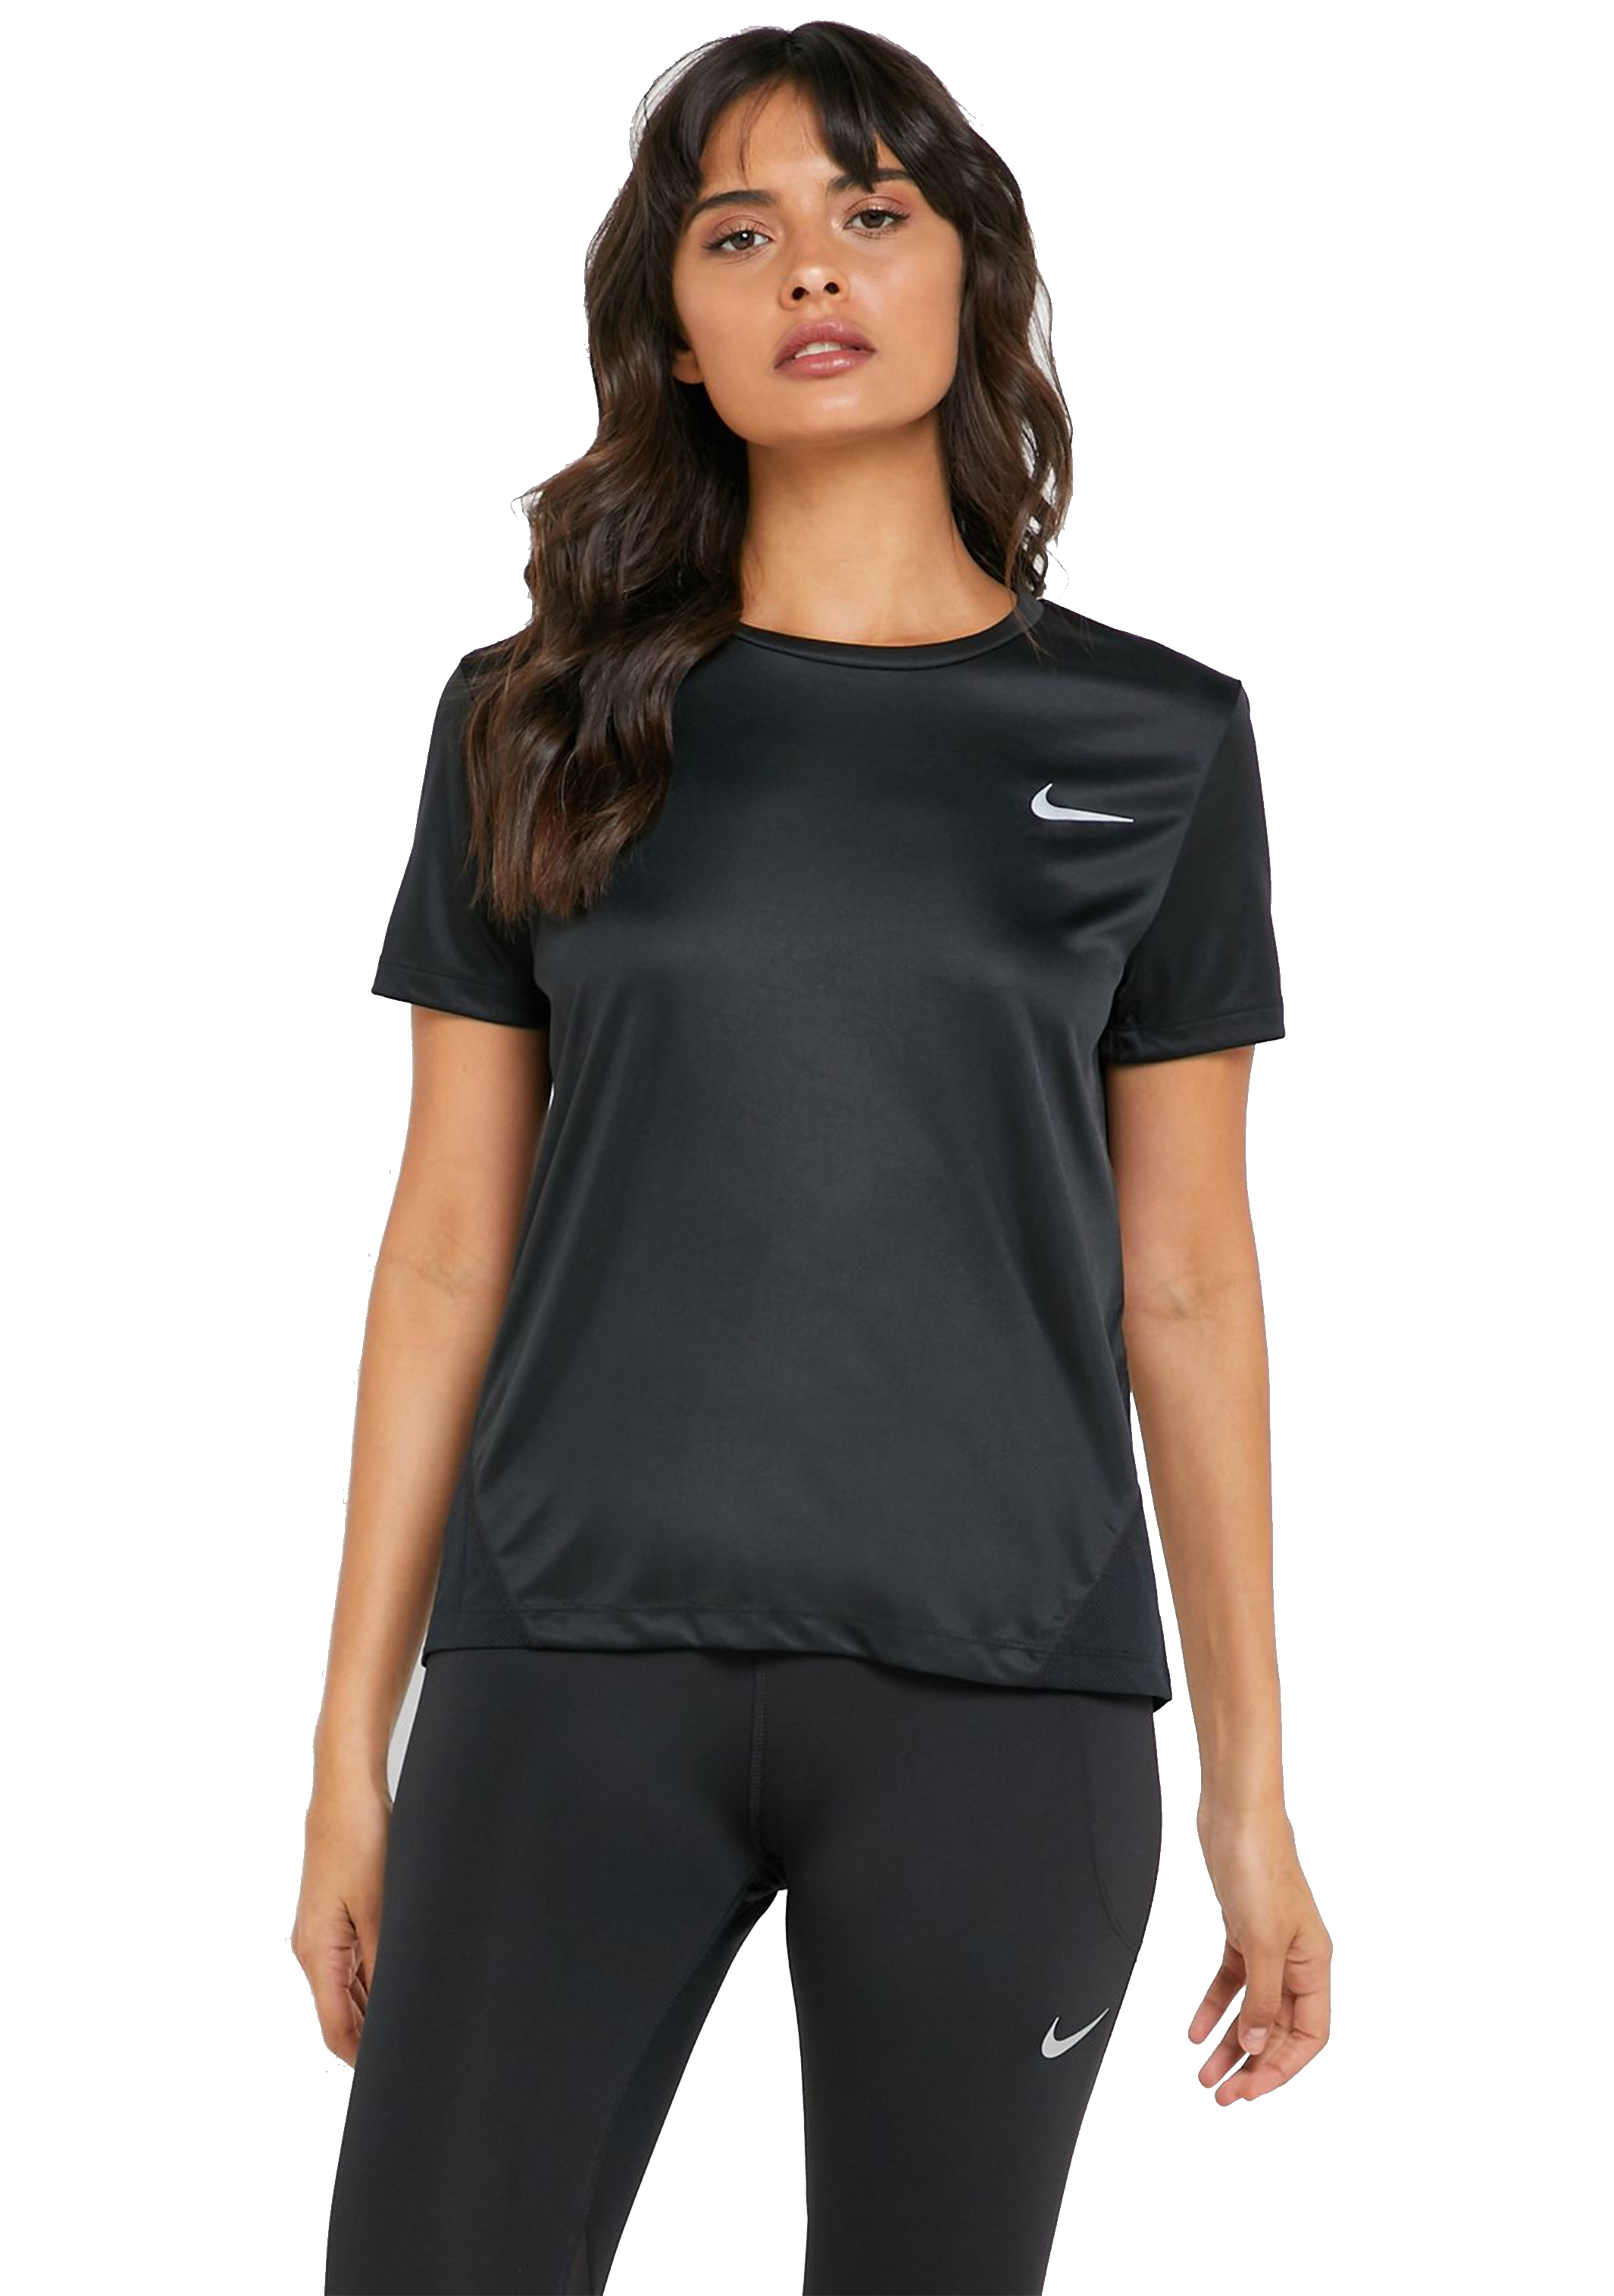 Nike Womens Miler Top Short Sleeve AJ8121 010 – Jim Kidd Sports